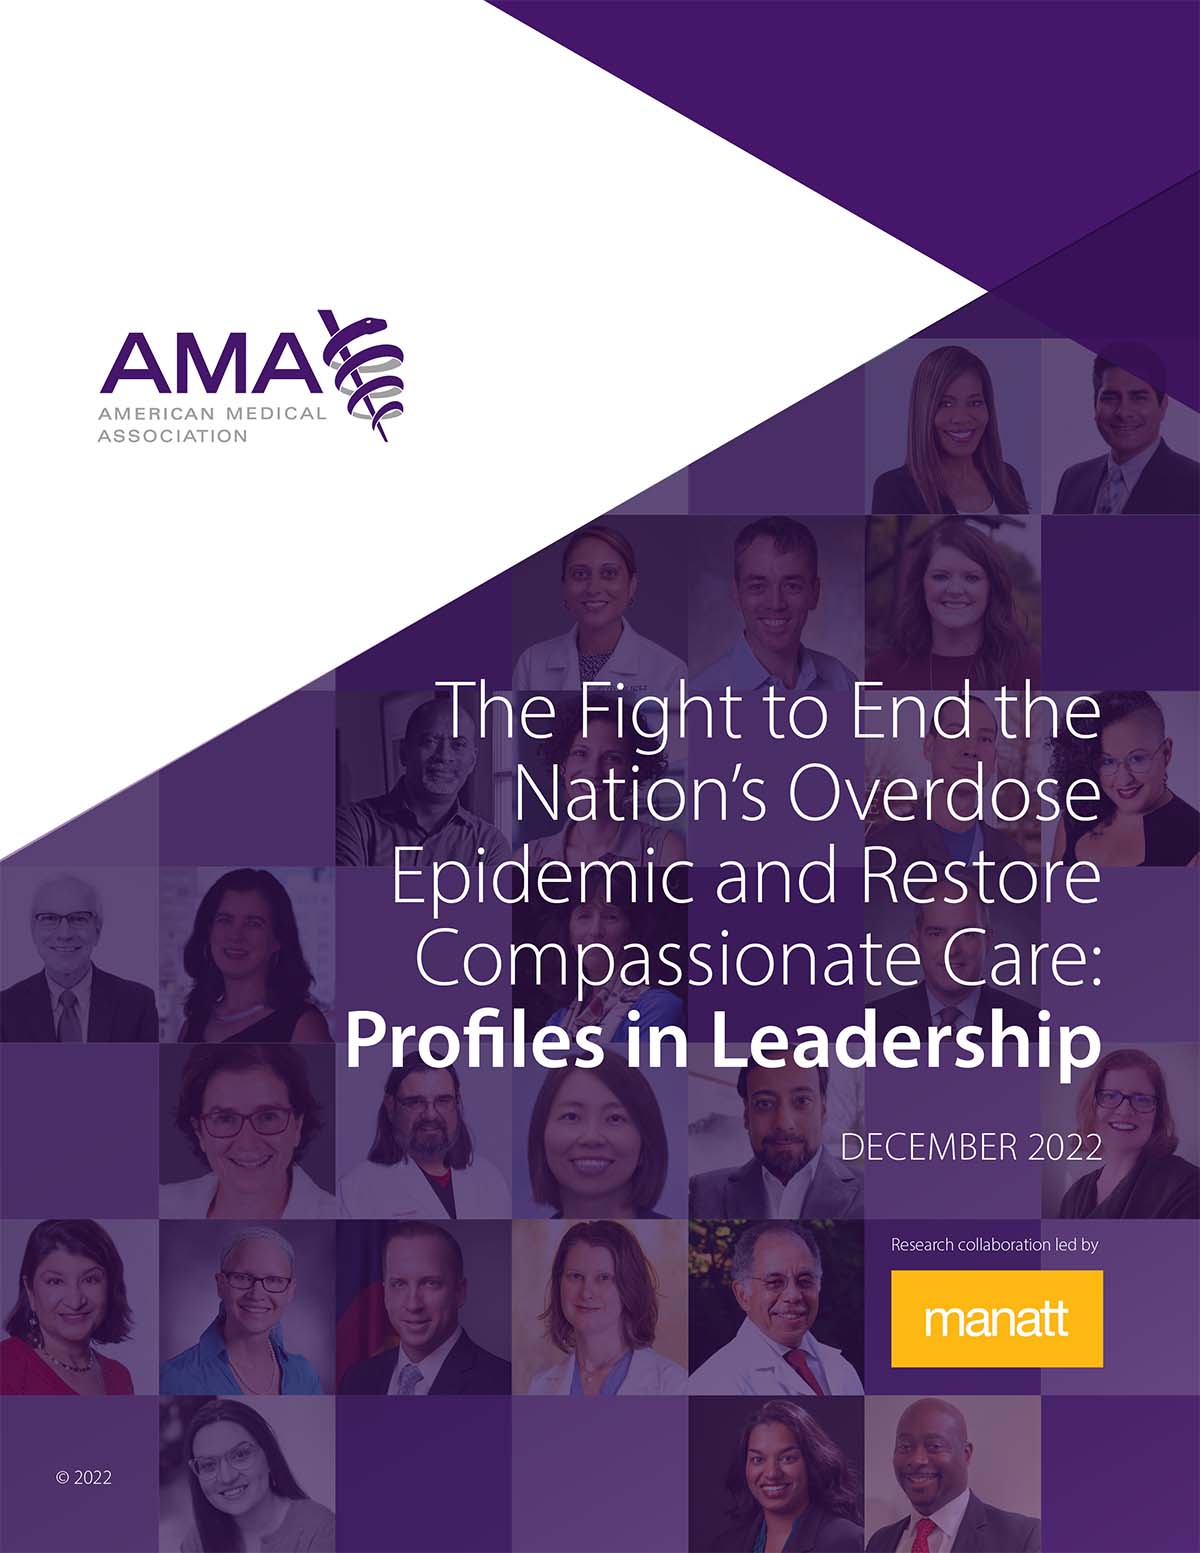 AMA Profiles in Leadership